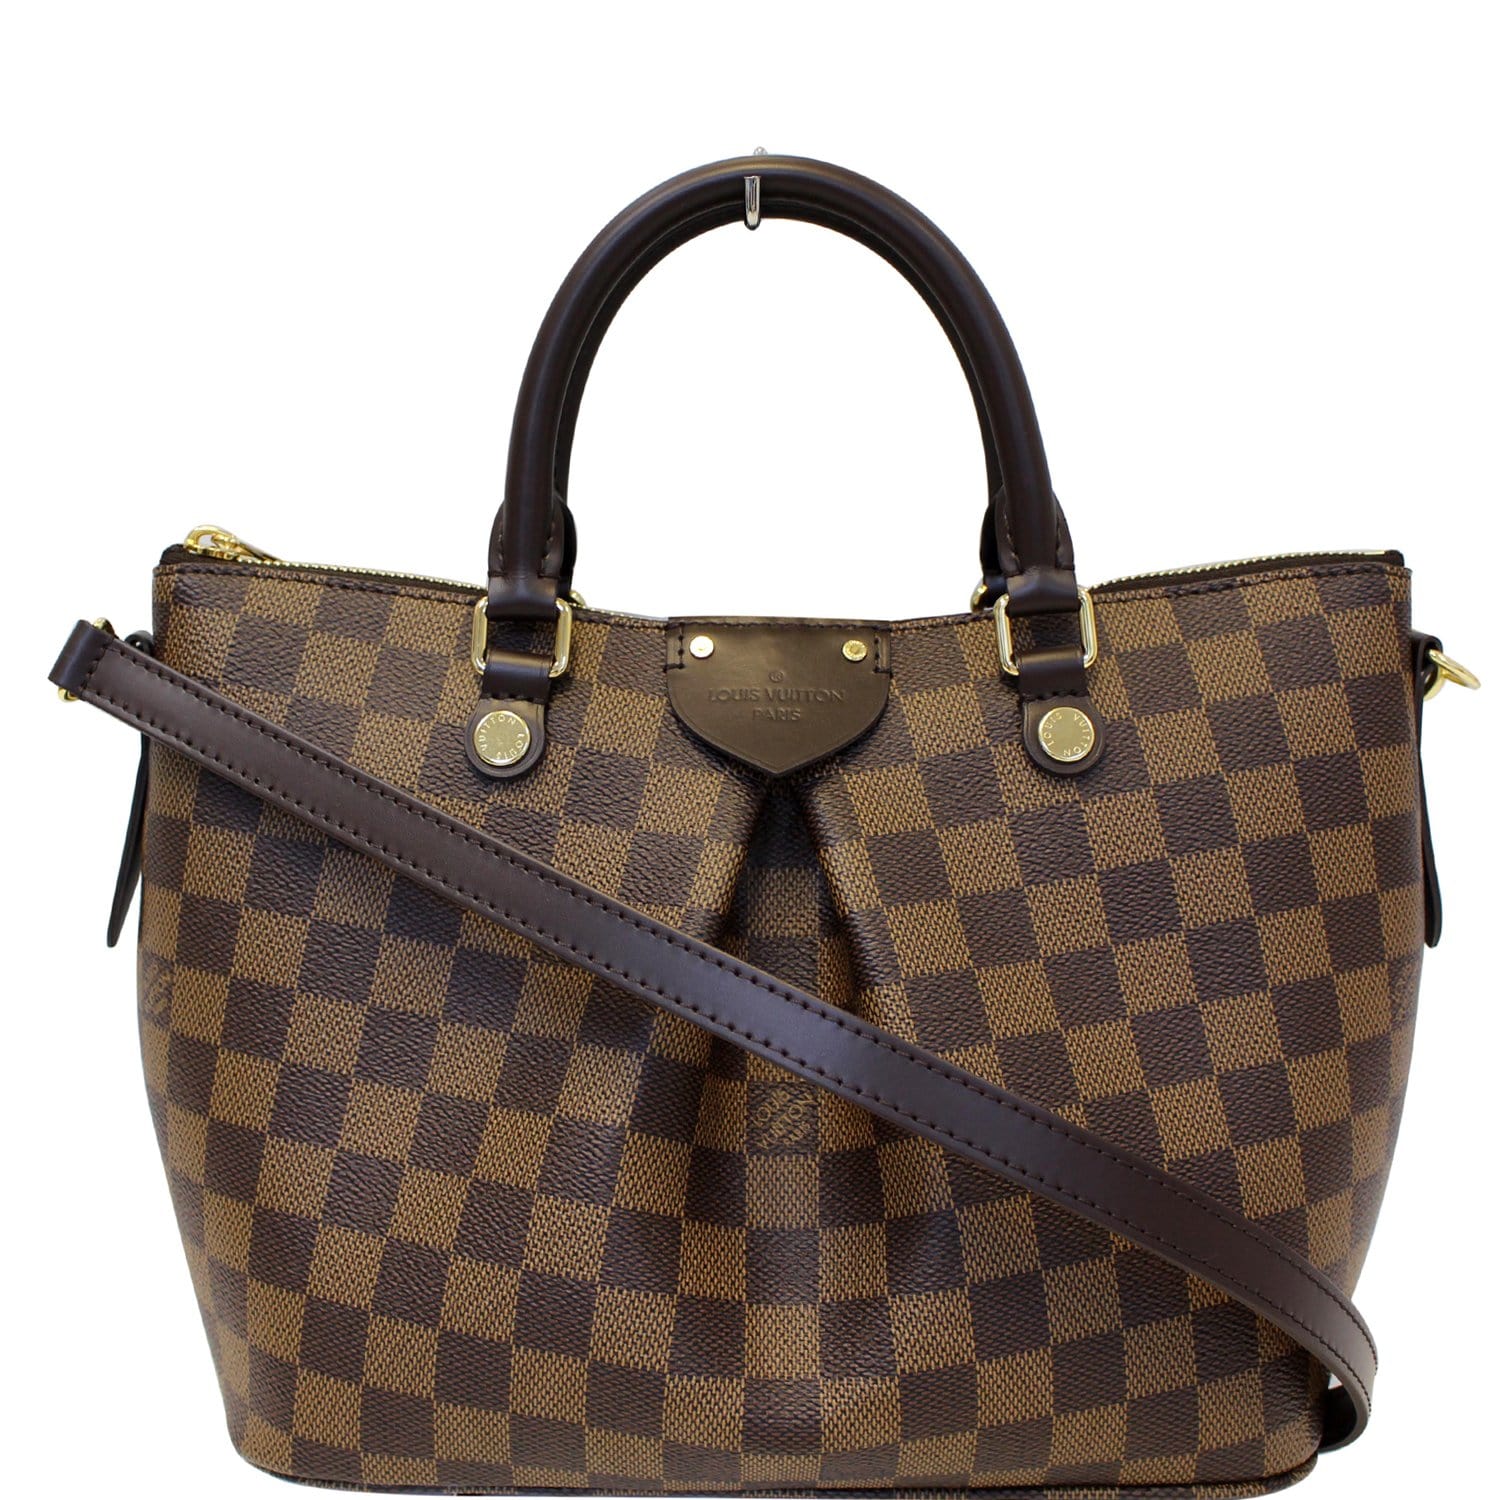 Trade of fake Louis Vuitton handbags under threat in Dubai  Al Arabiya  English